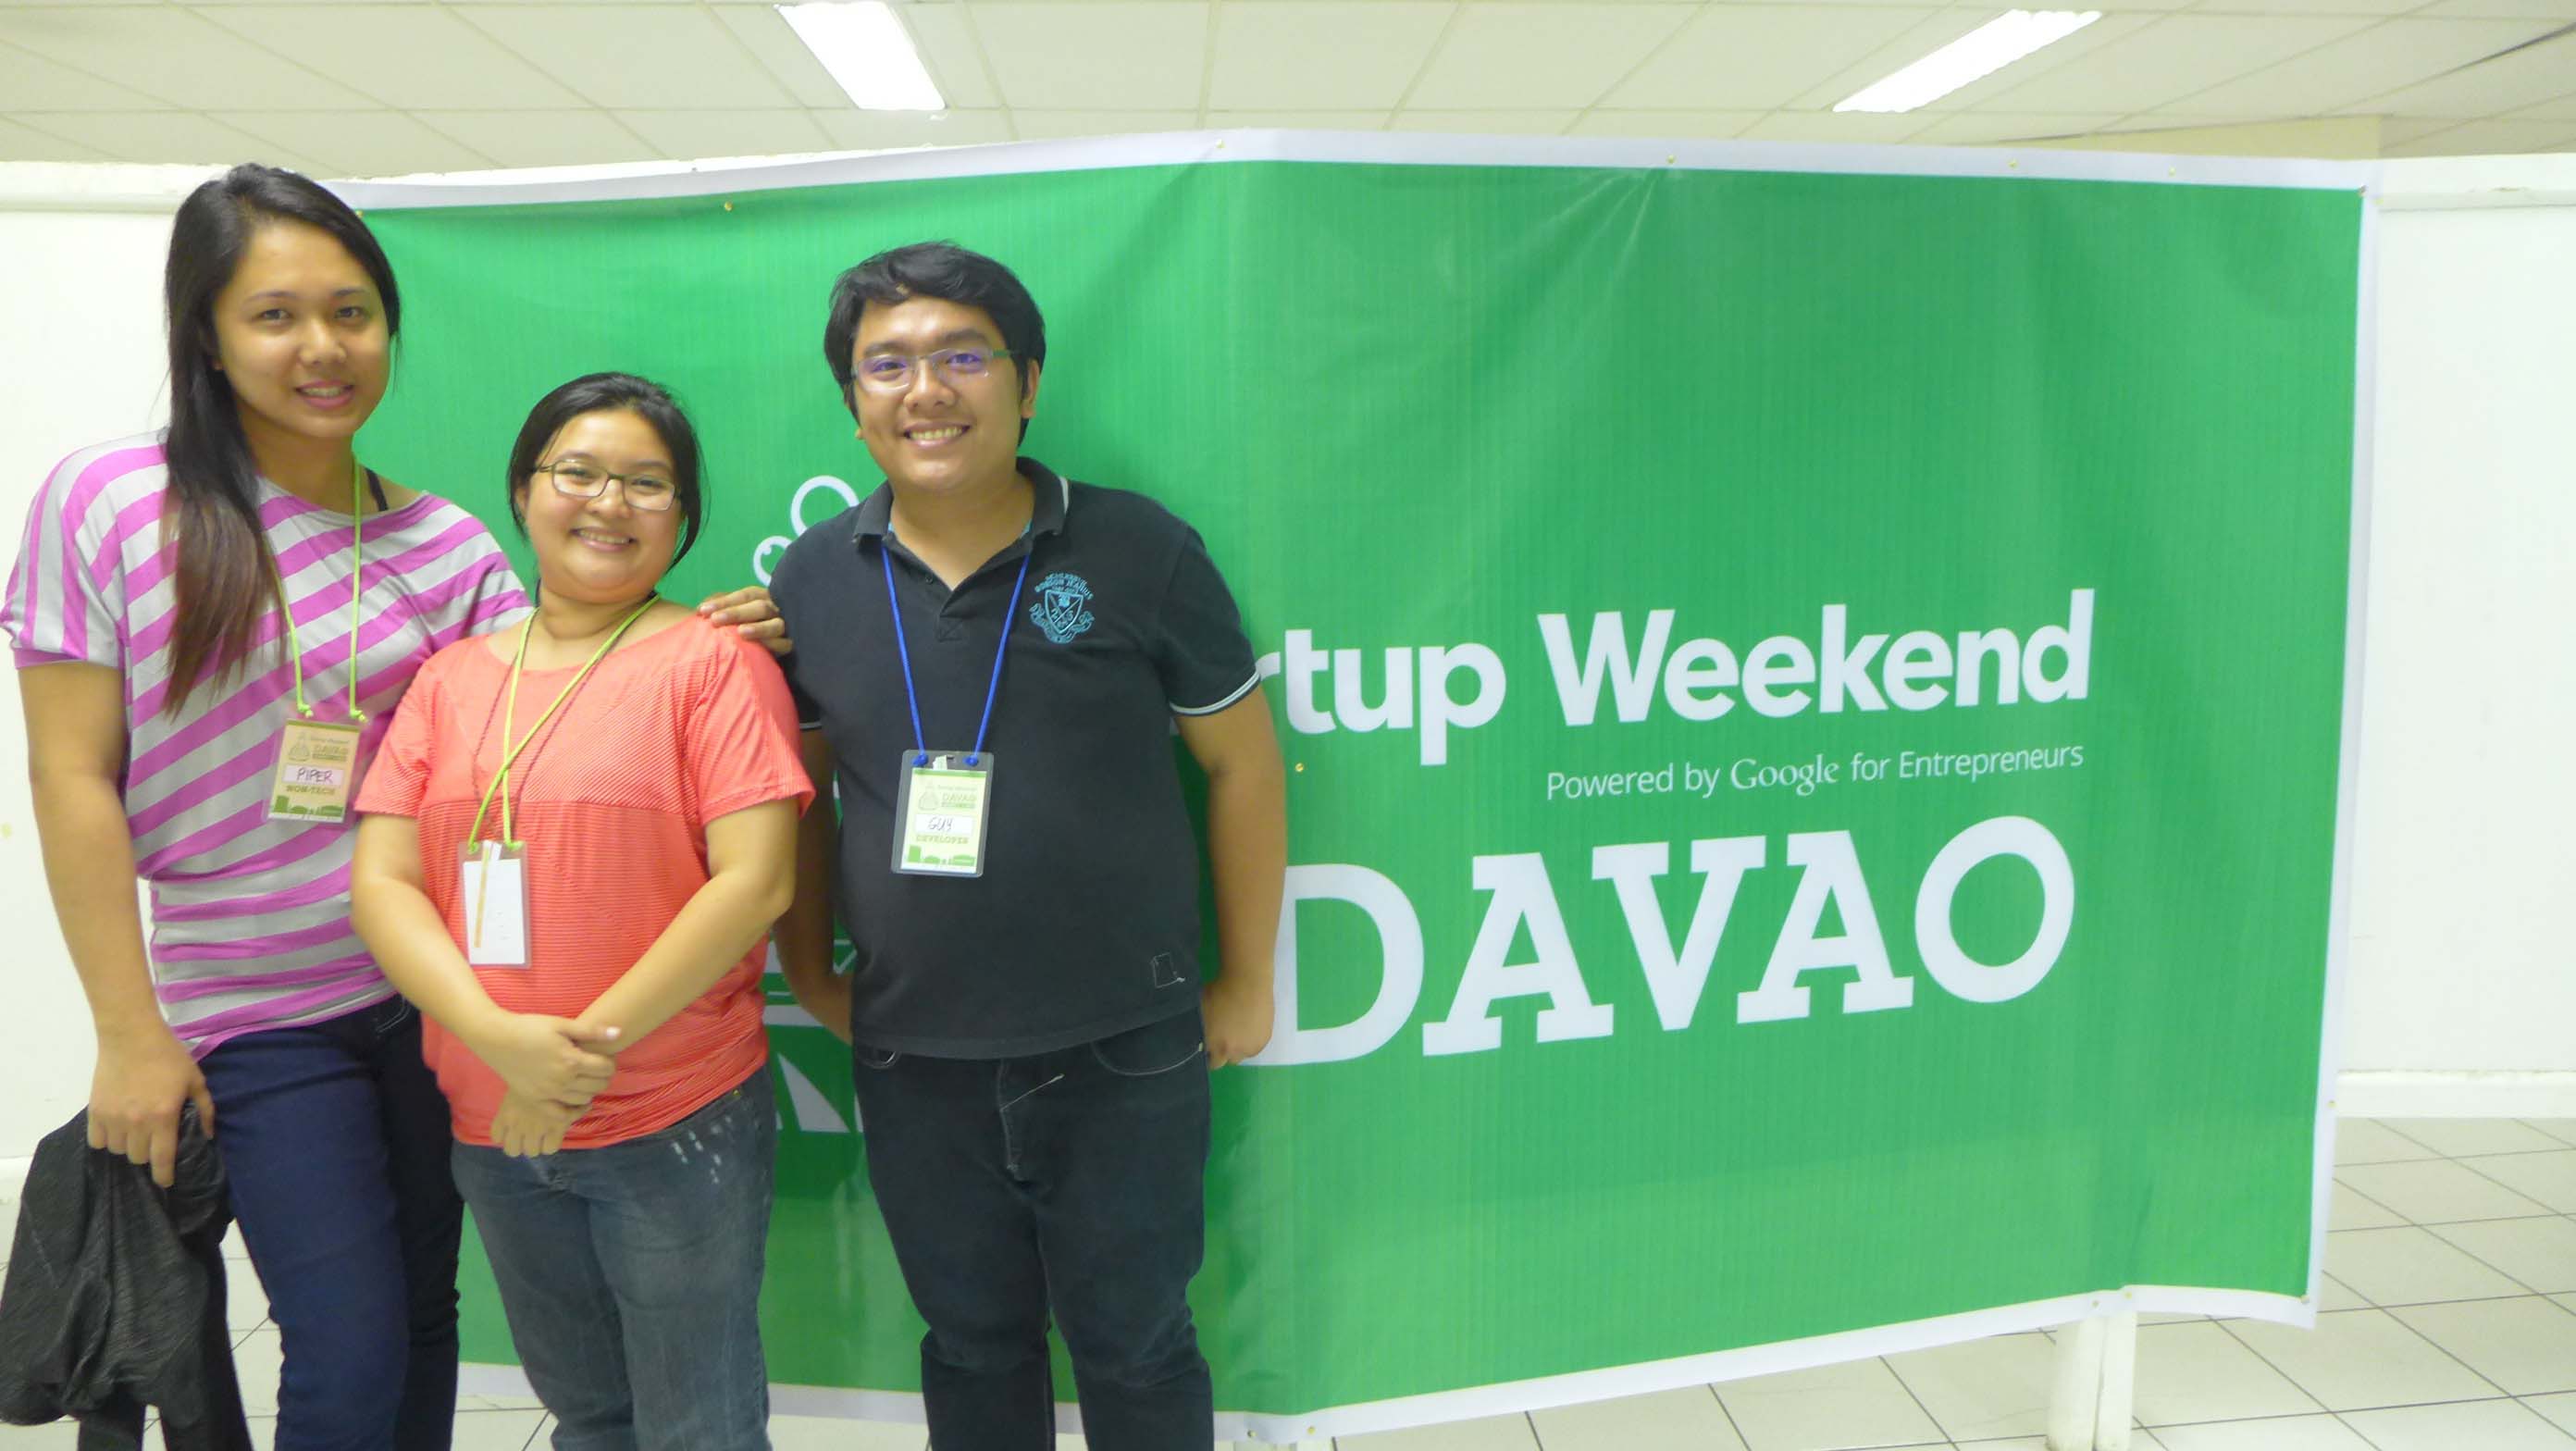 Onlinejobs.ph Jobseekers Participating in StartUp Weekend